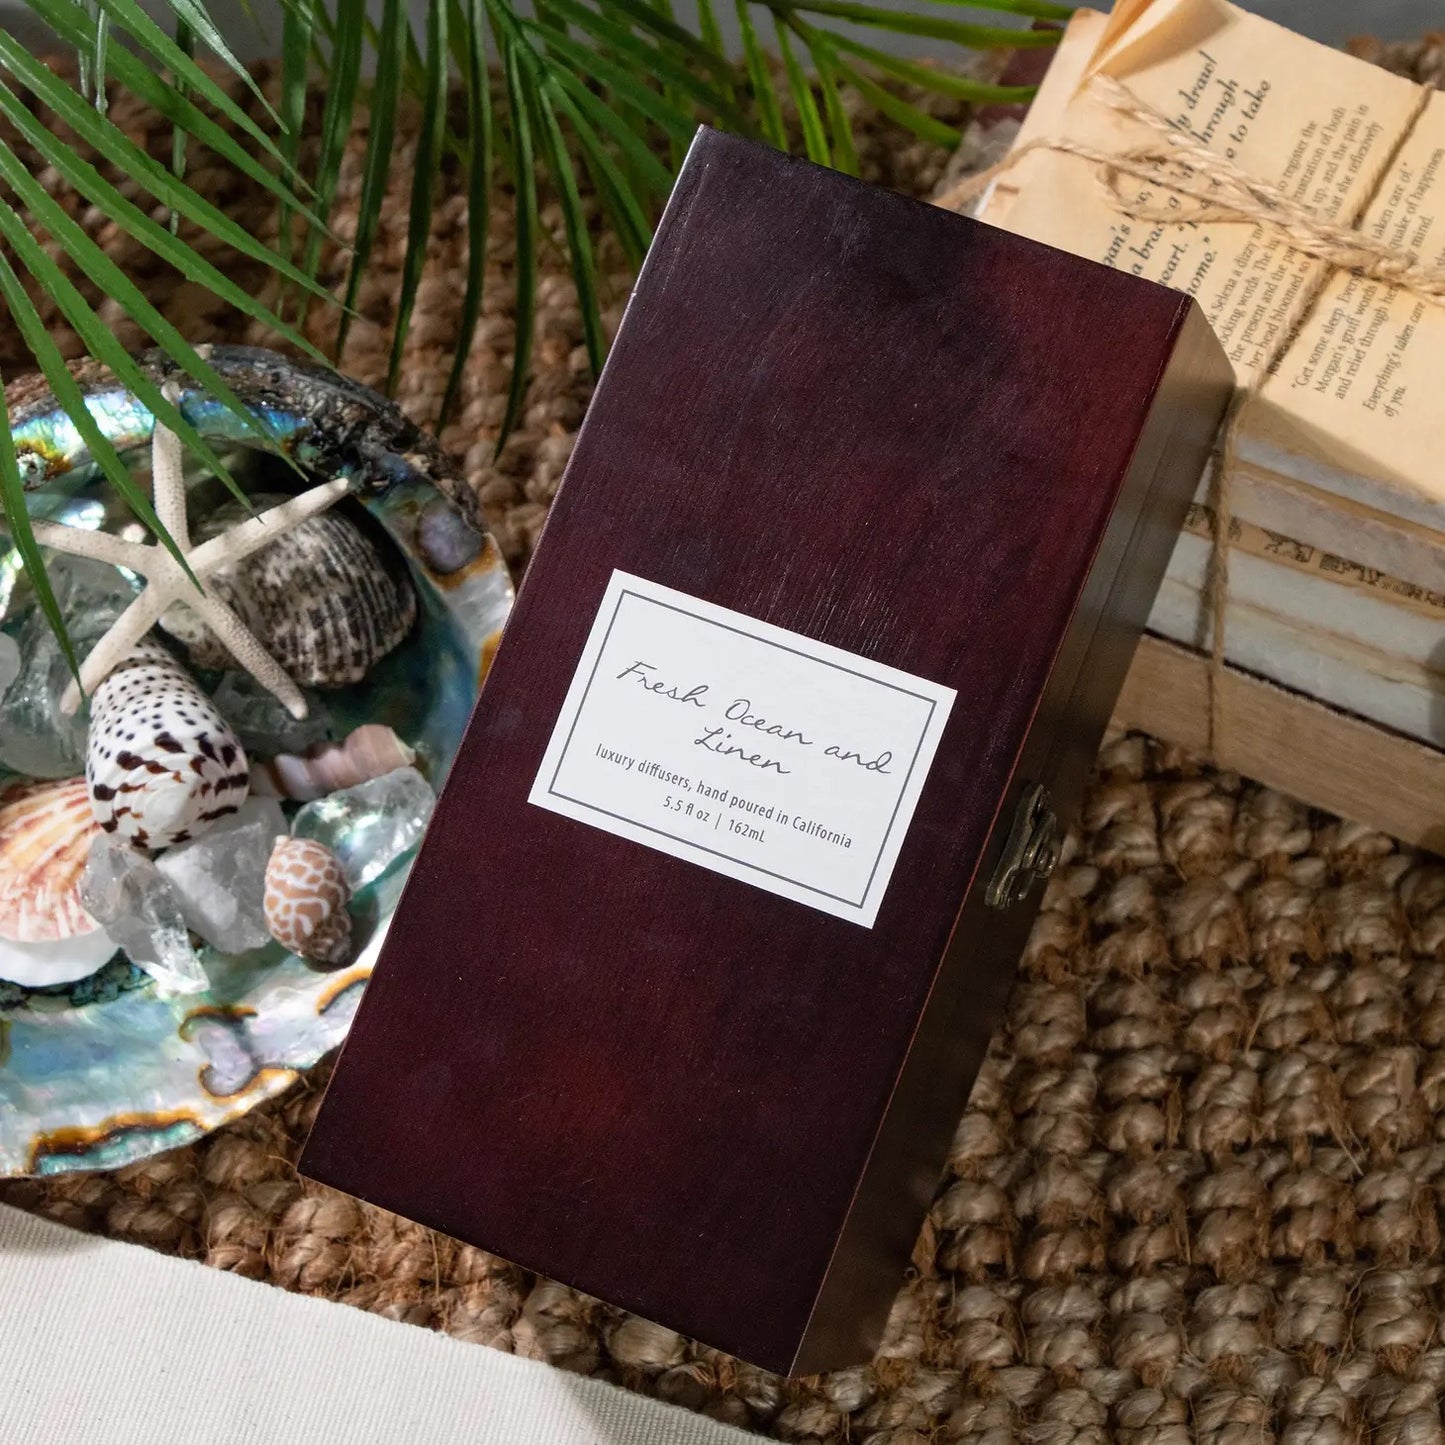 Fresh Ocean & Linen Reed Diffuser In Wood Box